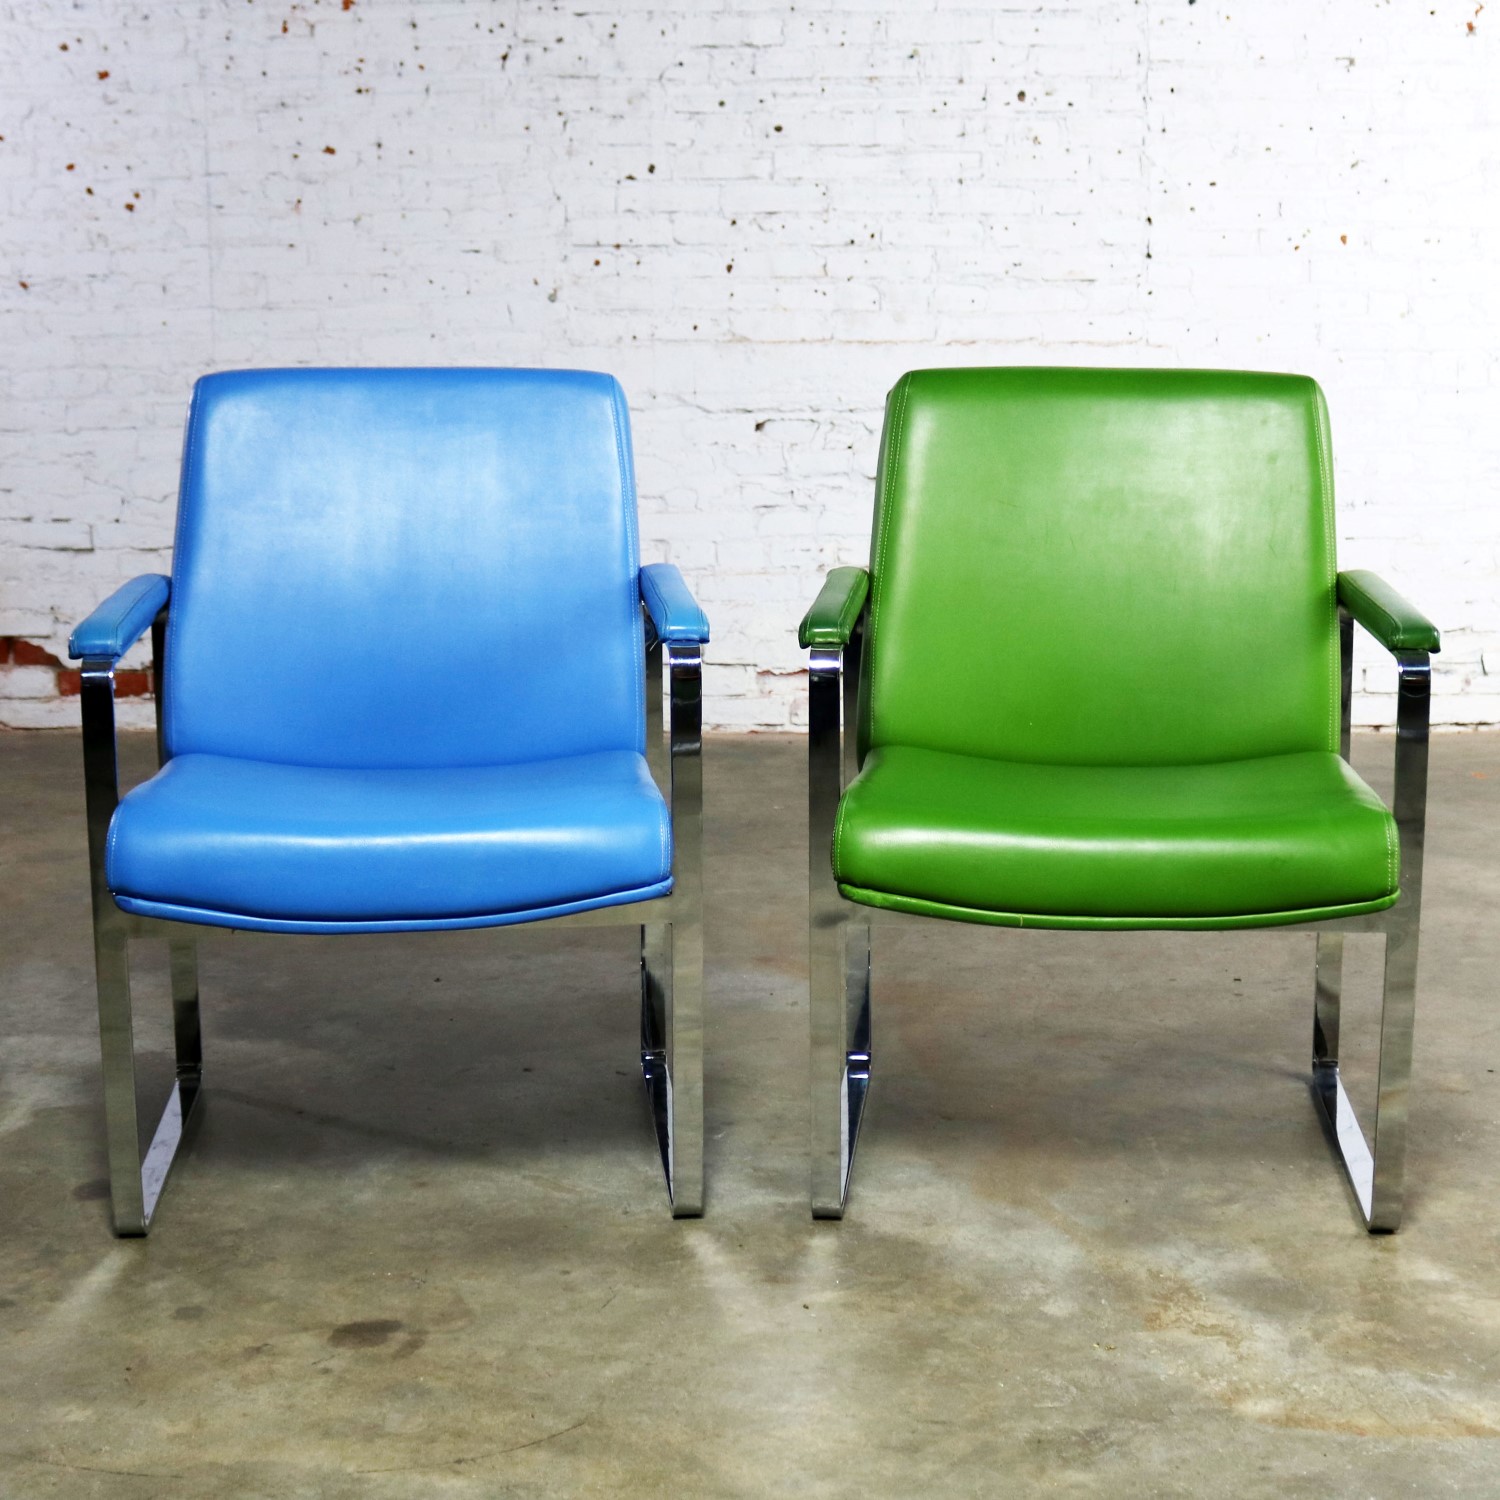 Mid Century Modern Chromcraft Flat Bar Chrome Chairs One Blue One Green Vinyl